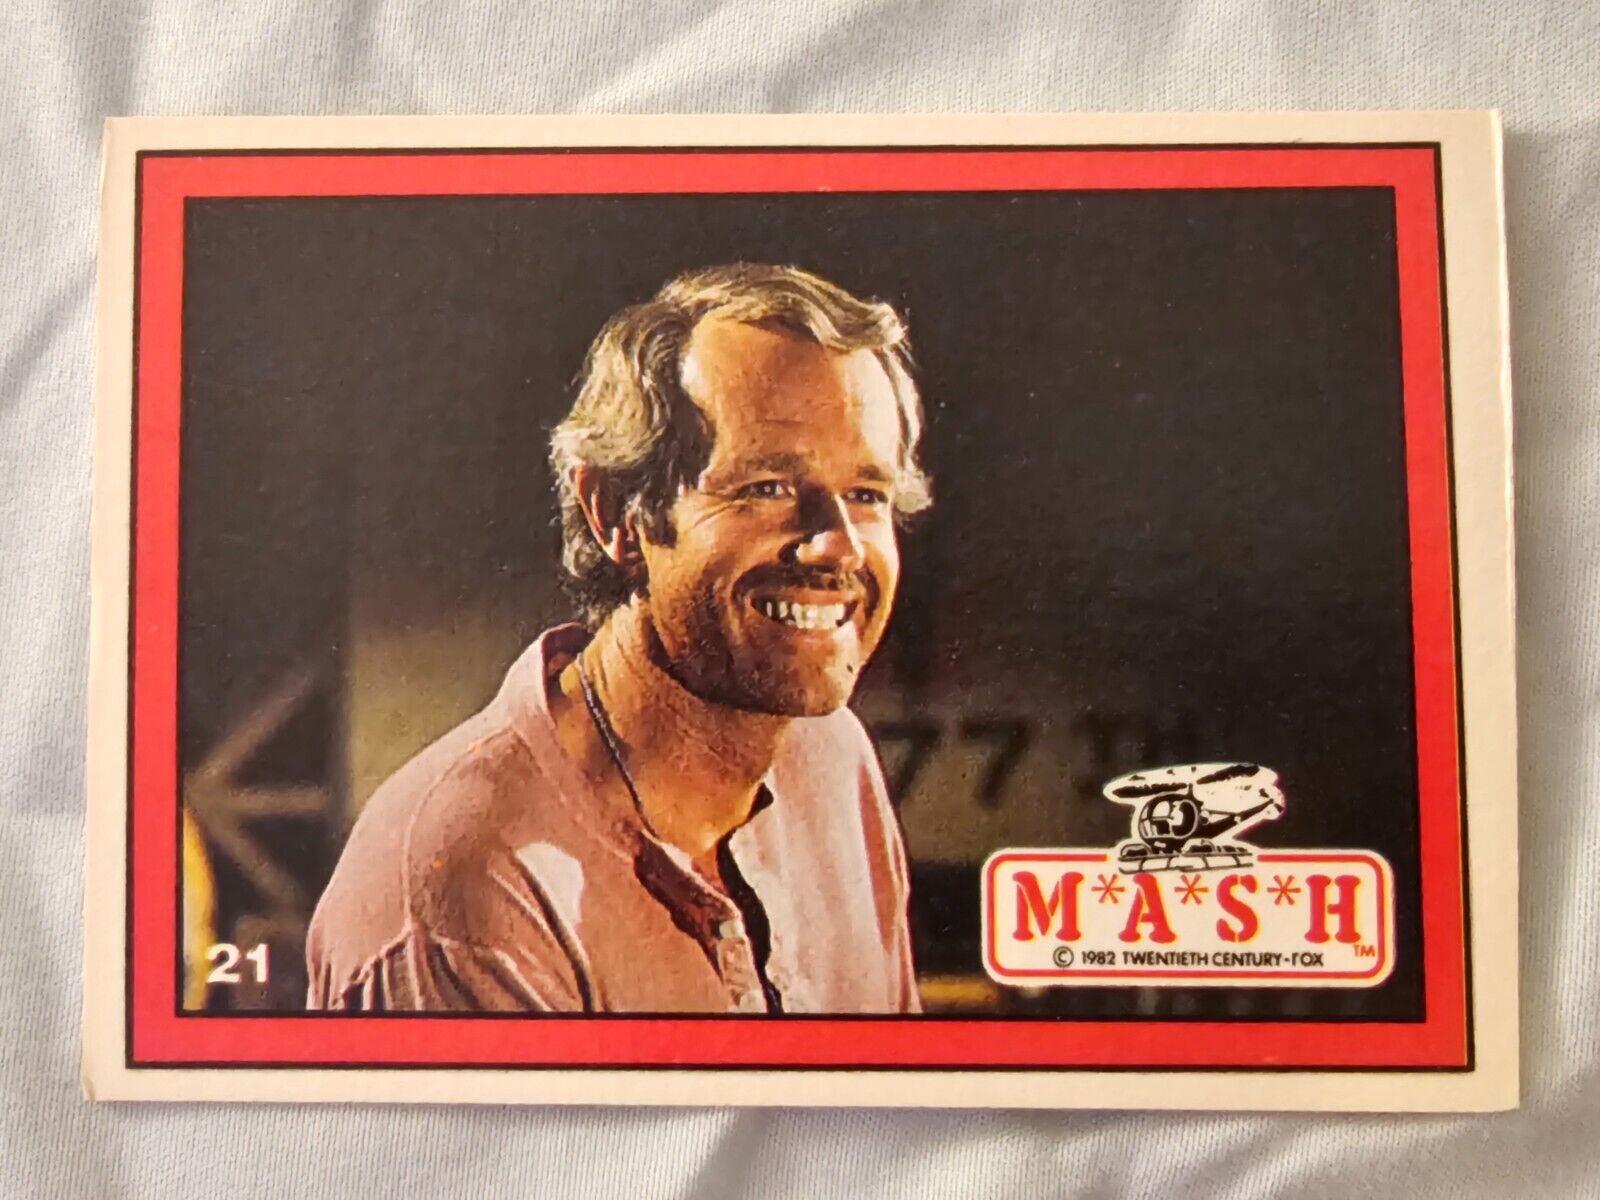 1982 Donruss MASH Trading Card #21